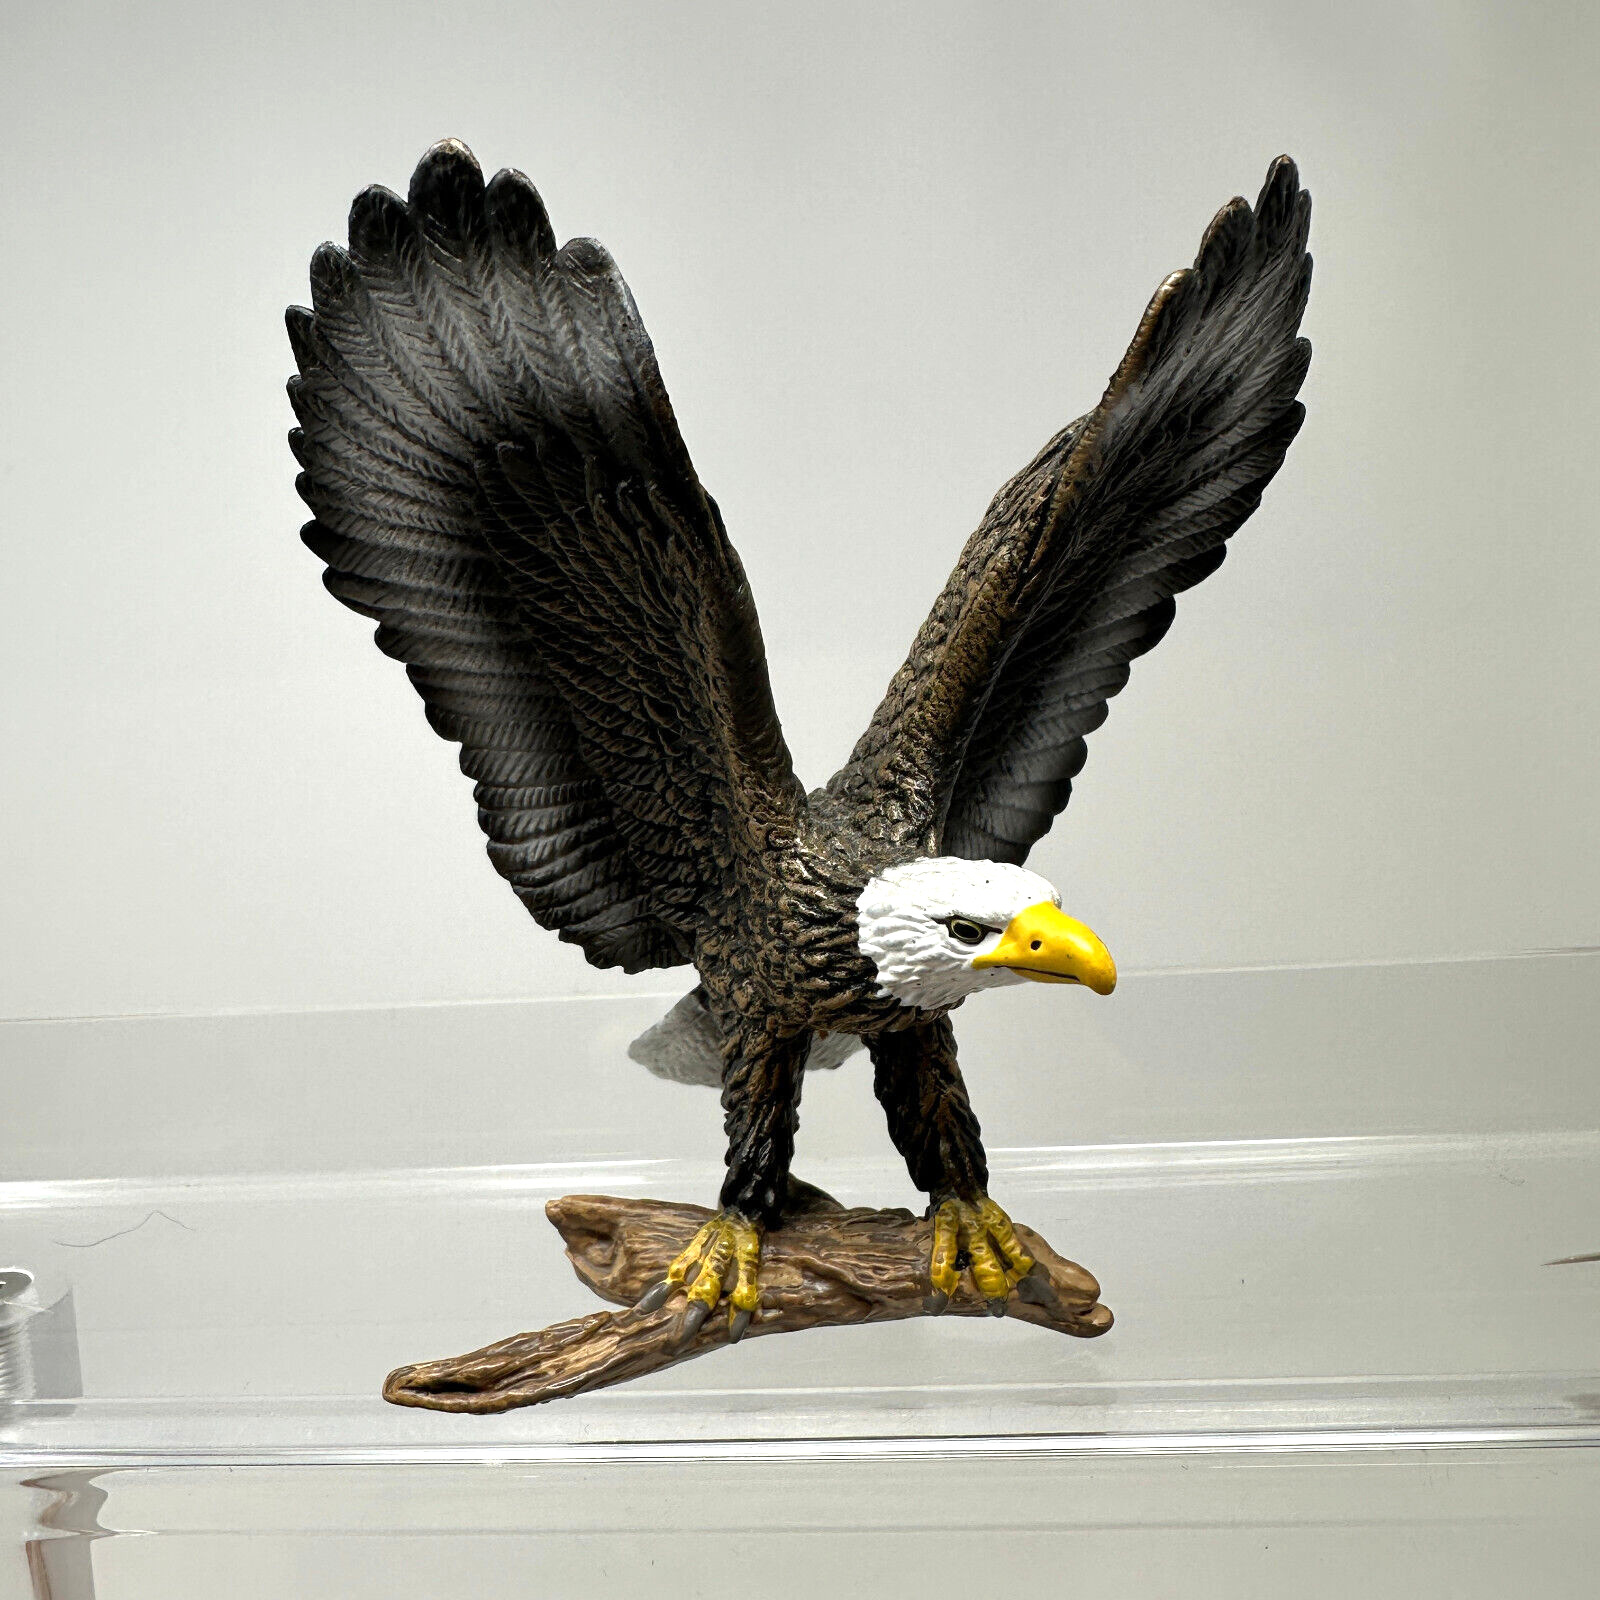 Schleich 14634 LANDING BALD EAGLE Wings Spread Retired Animal figure 2010